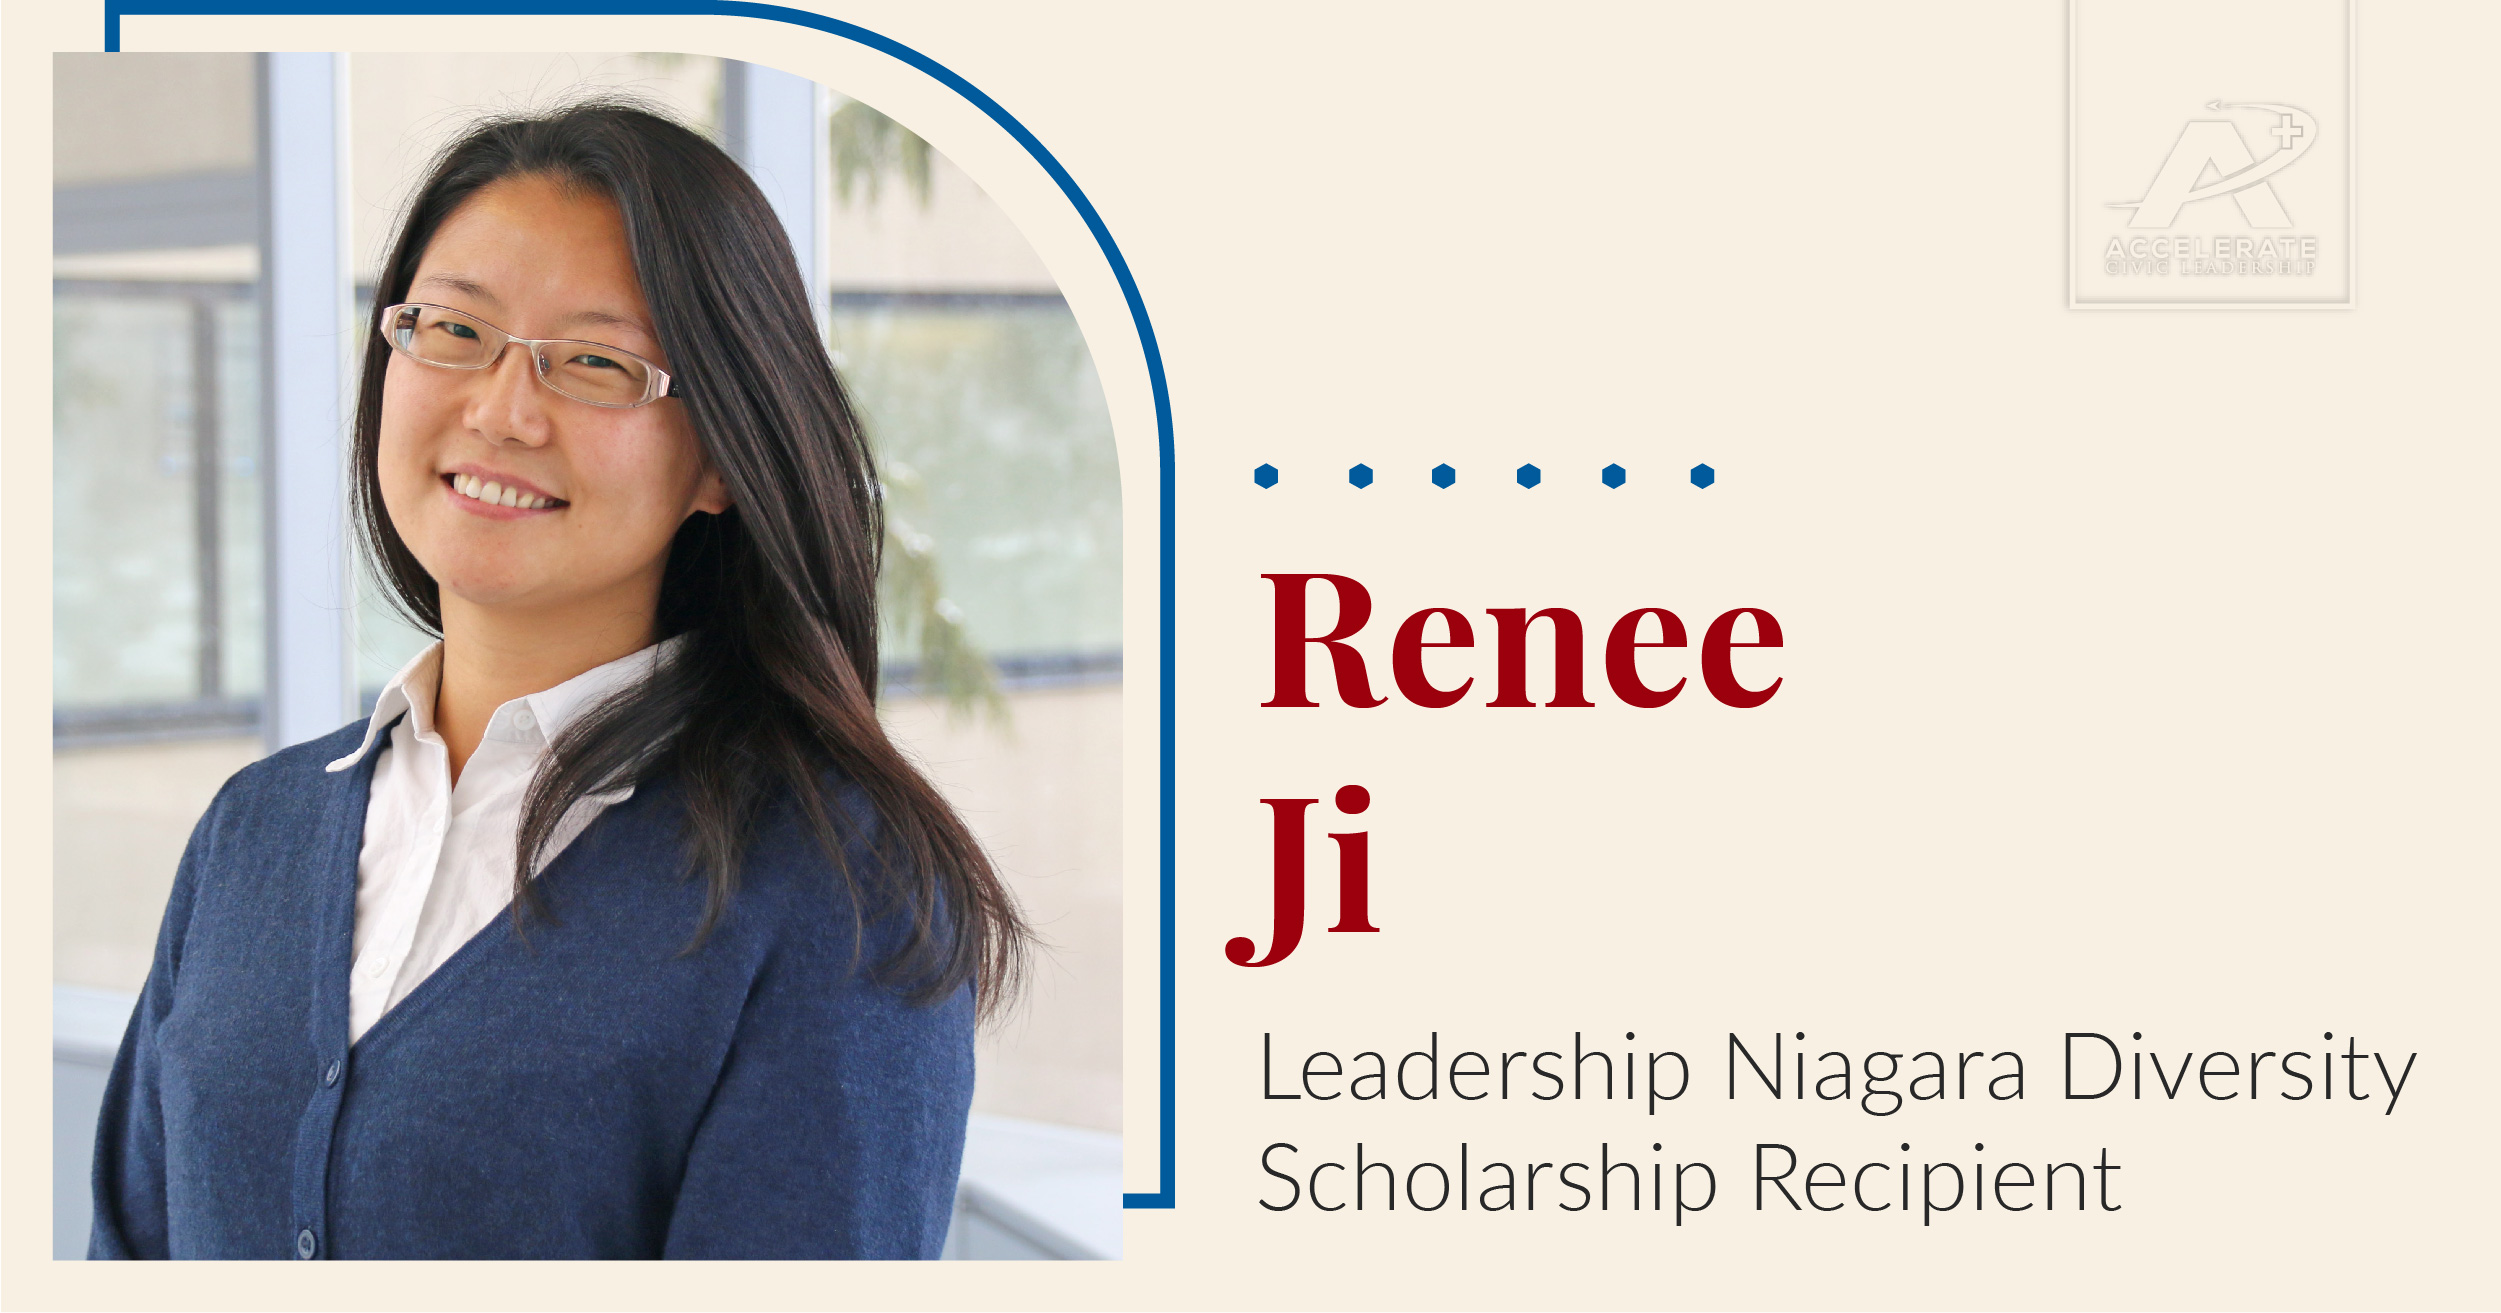 Leader spotlight for Renne Ji, winner of the Leadership Niagara Diversity Scholarship